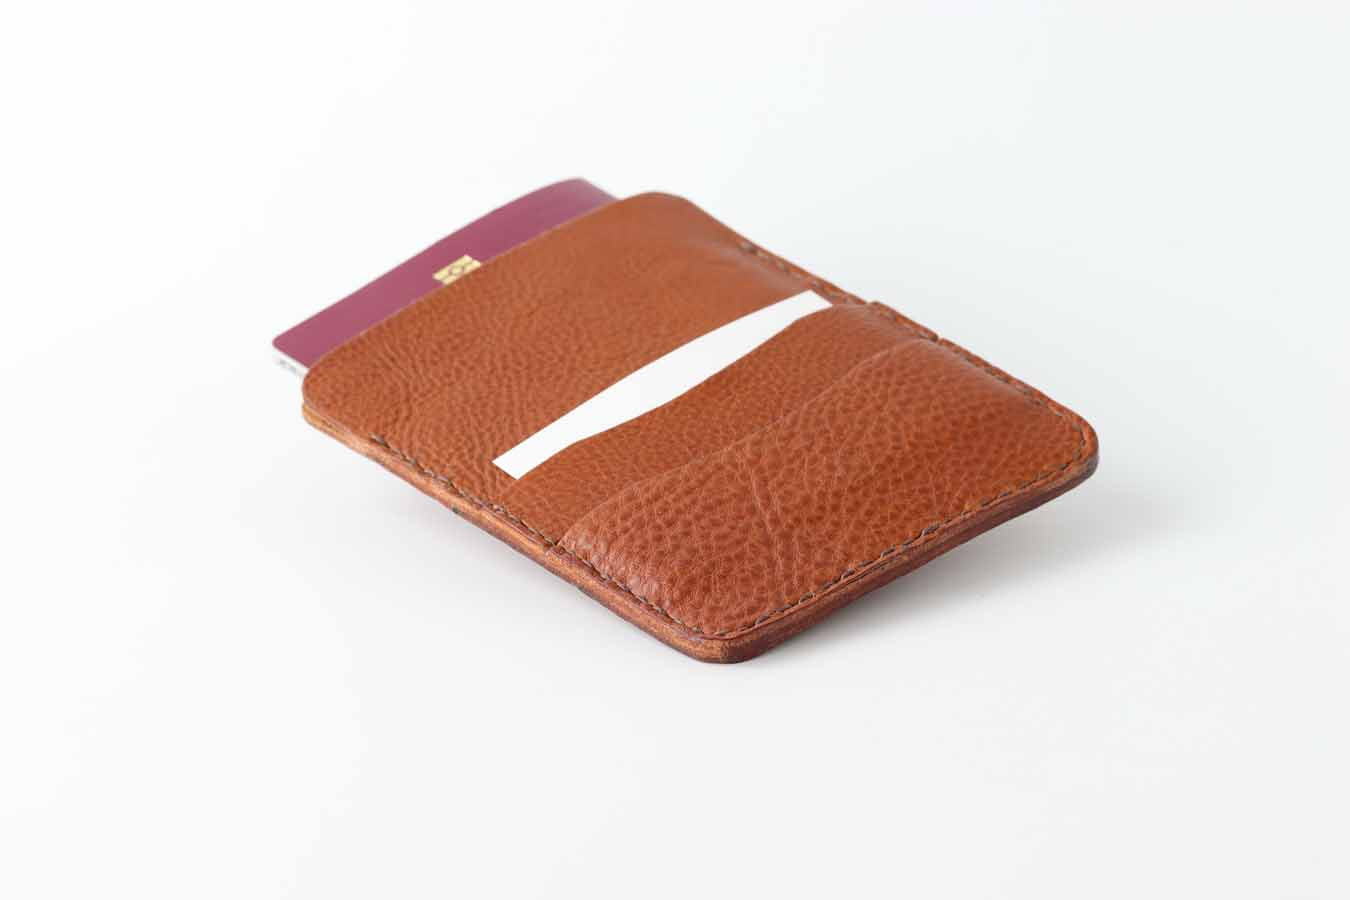 travel wallet / passport wallet case